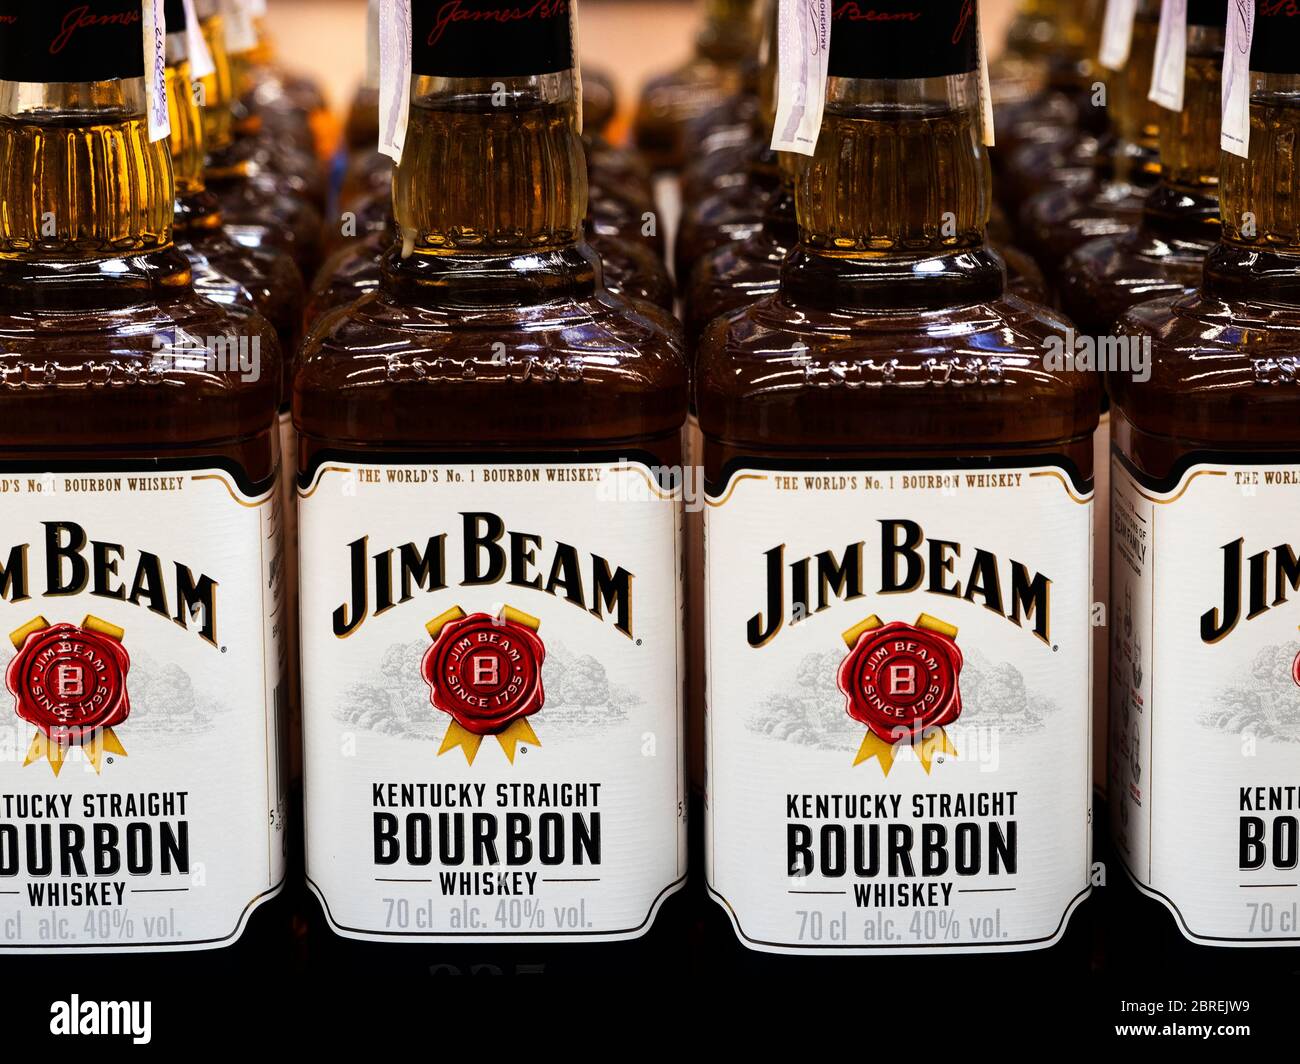 Jim Beam, Kentucky Straight Bourbon Whiskey vu dans un supermarché. Banque D'Images